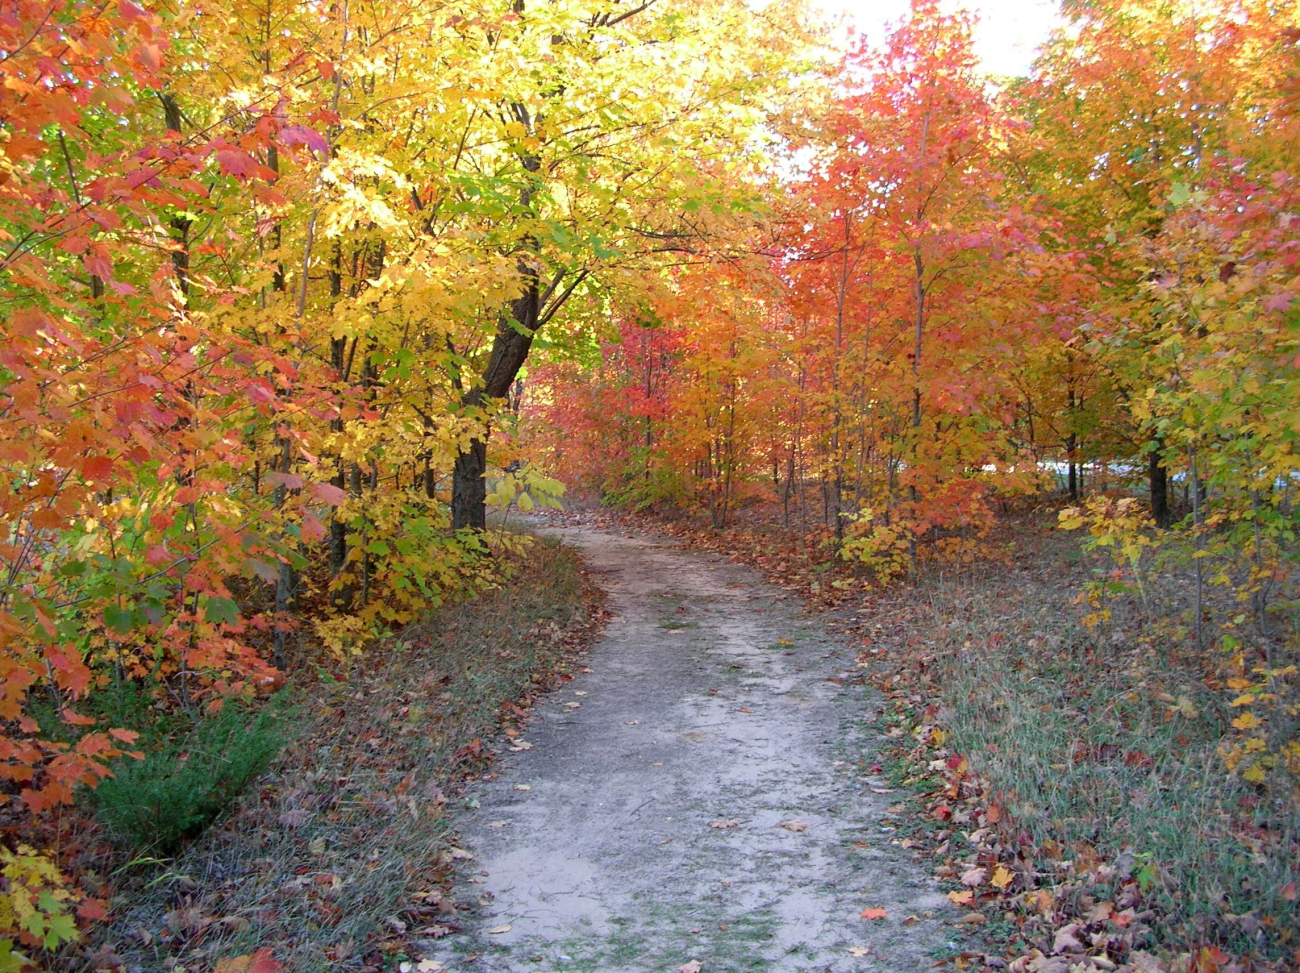 Fall foliage gracing a wooded path